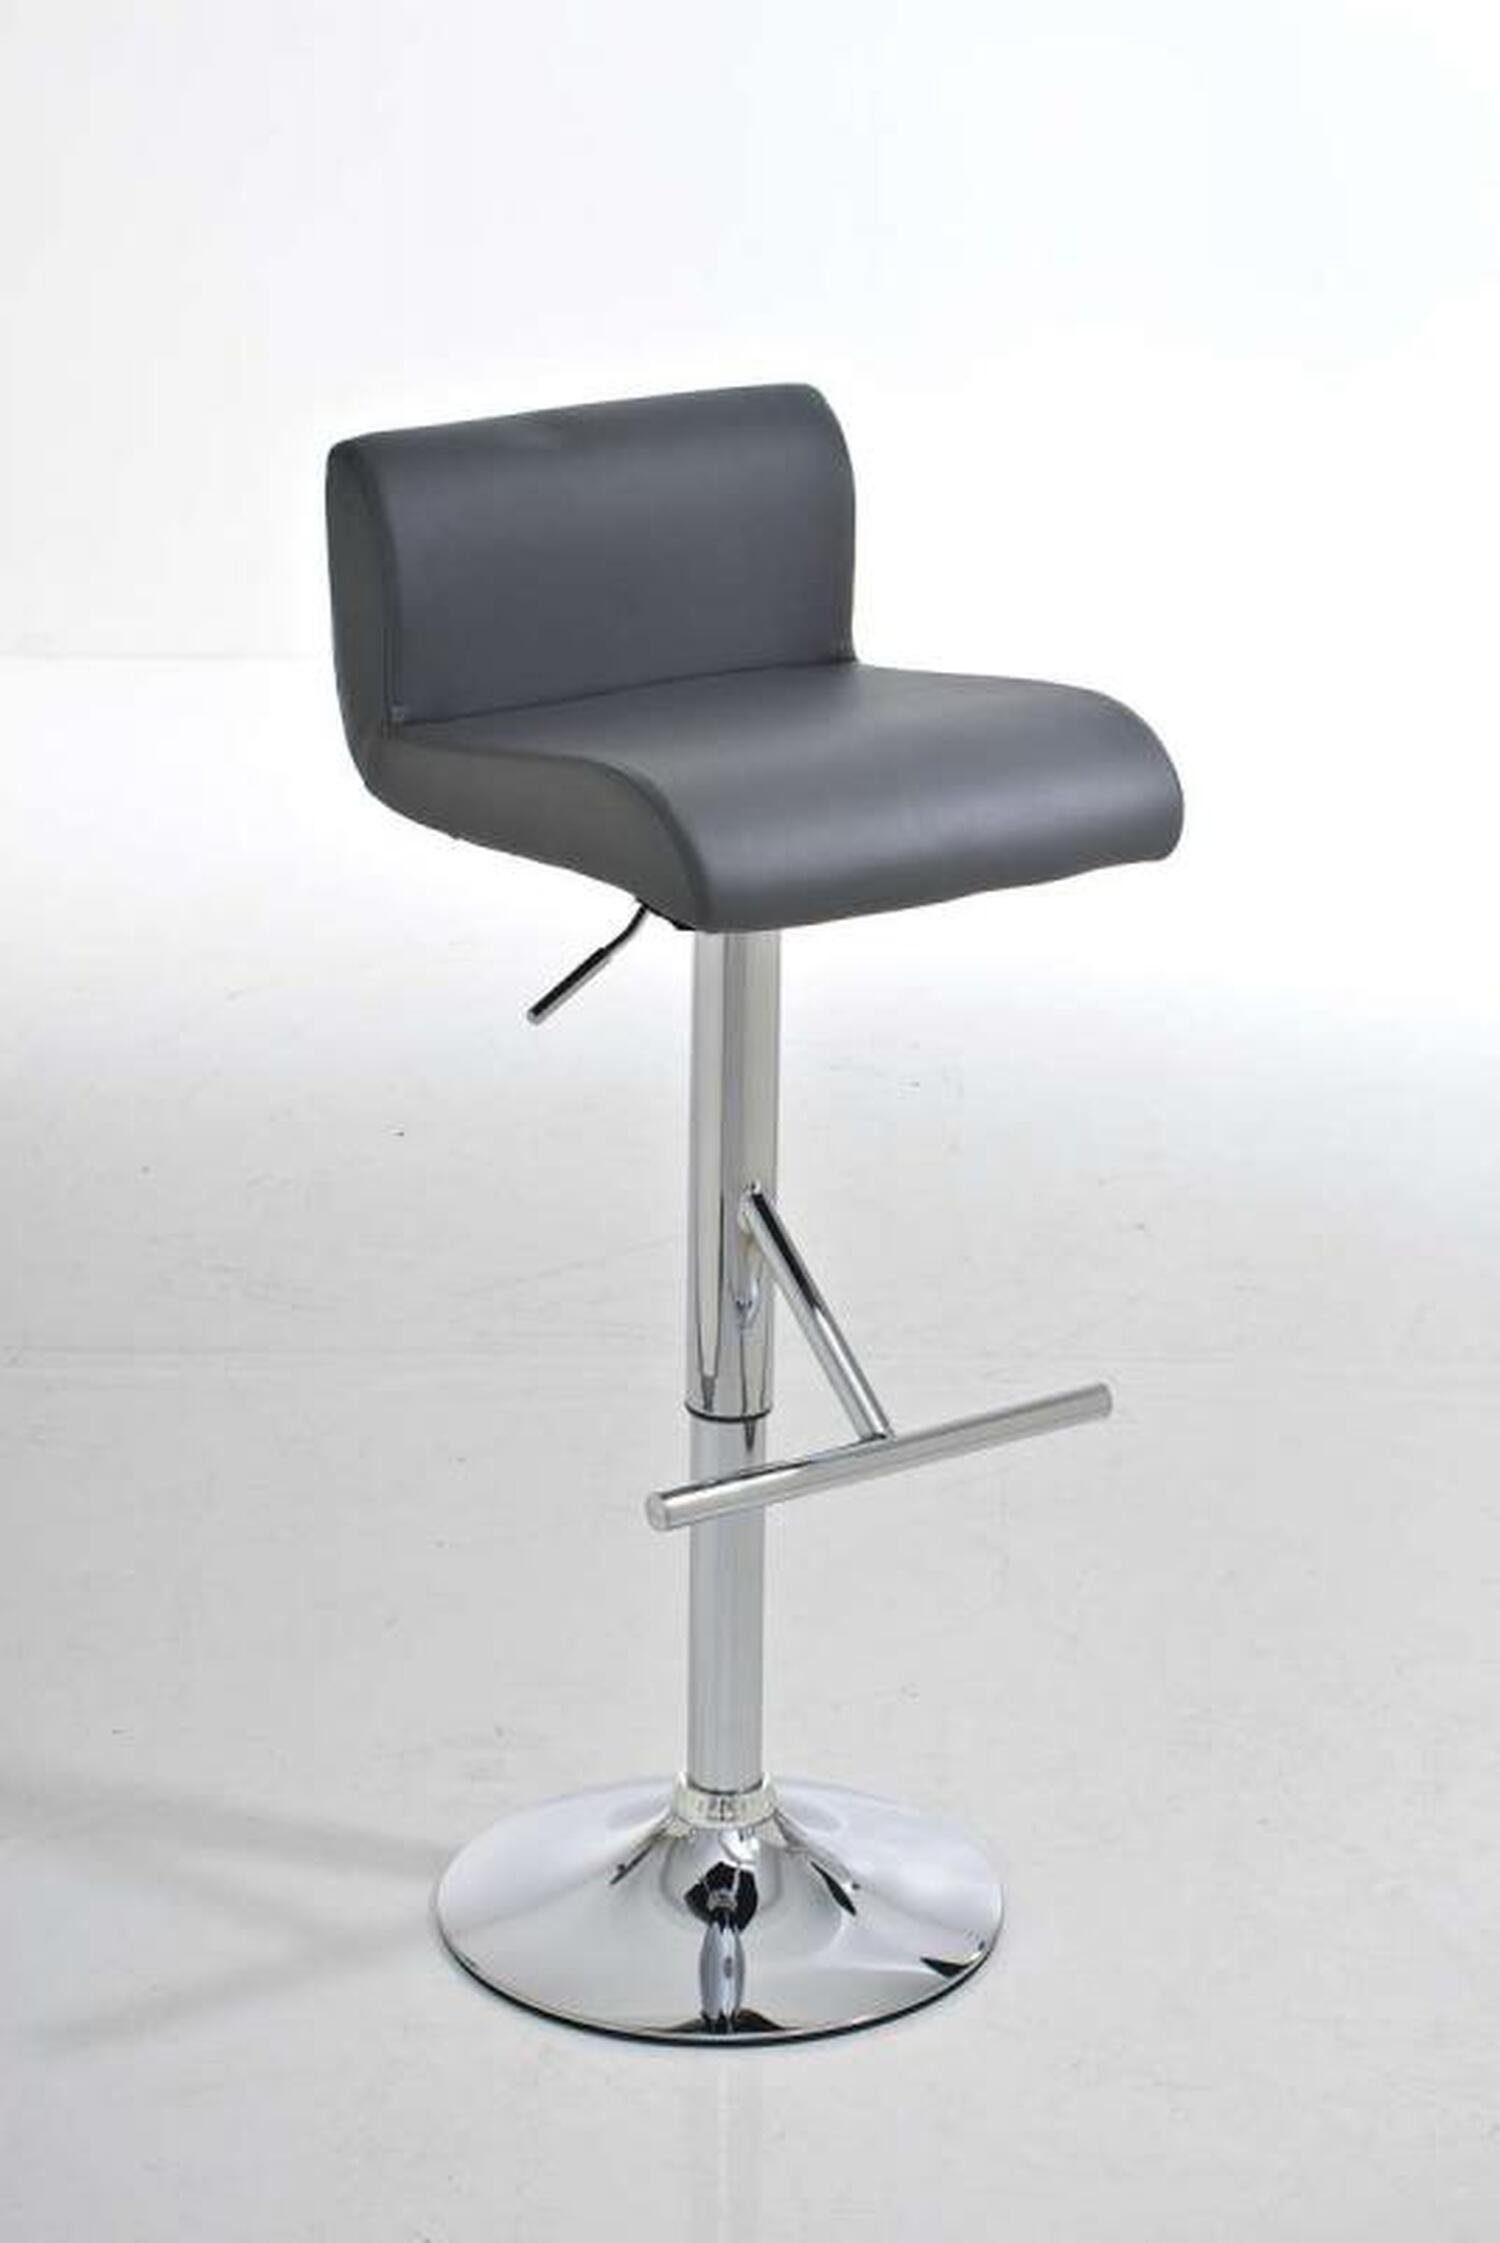 Sitzfläche: - (Barstuhl Barhocker Calif chromfarbener TPFLiving höhenverstellbar Tresenhocker), Grau für - Hocker - - 360° Theke & Stahl drehbar Küche Kunstleder